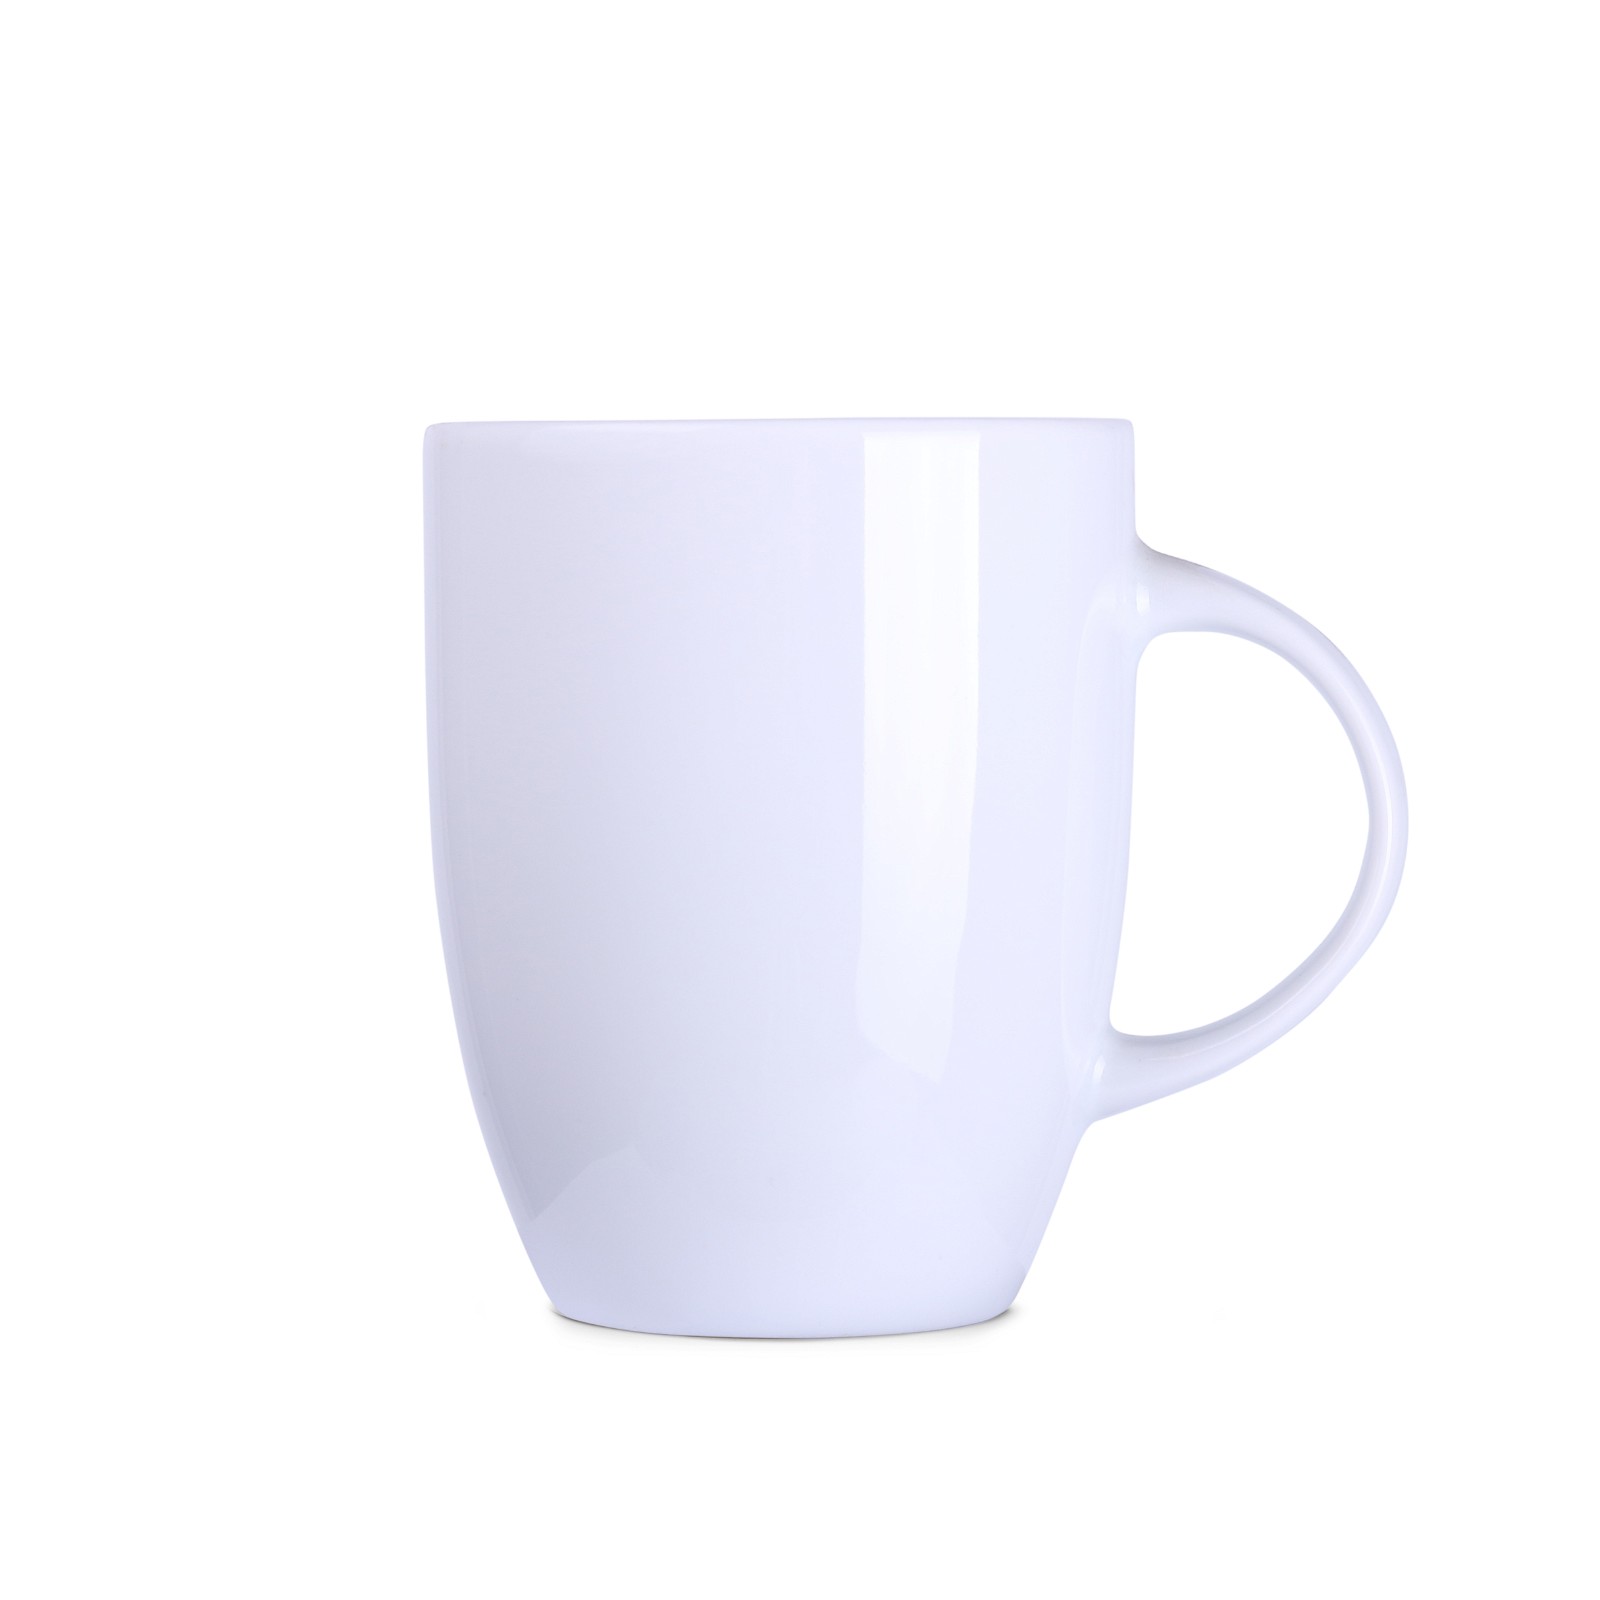 mug roxy 330ml with logo